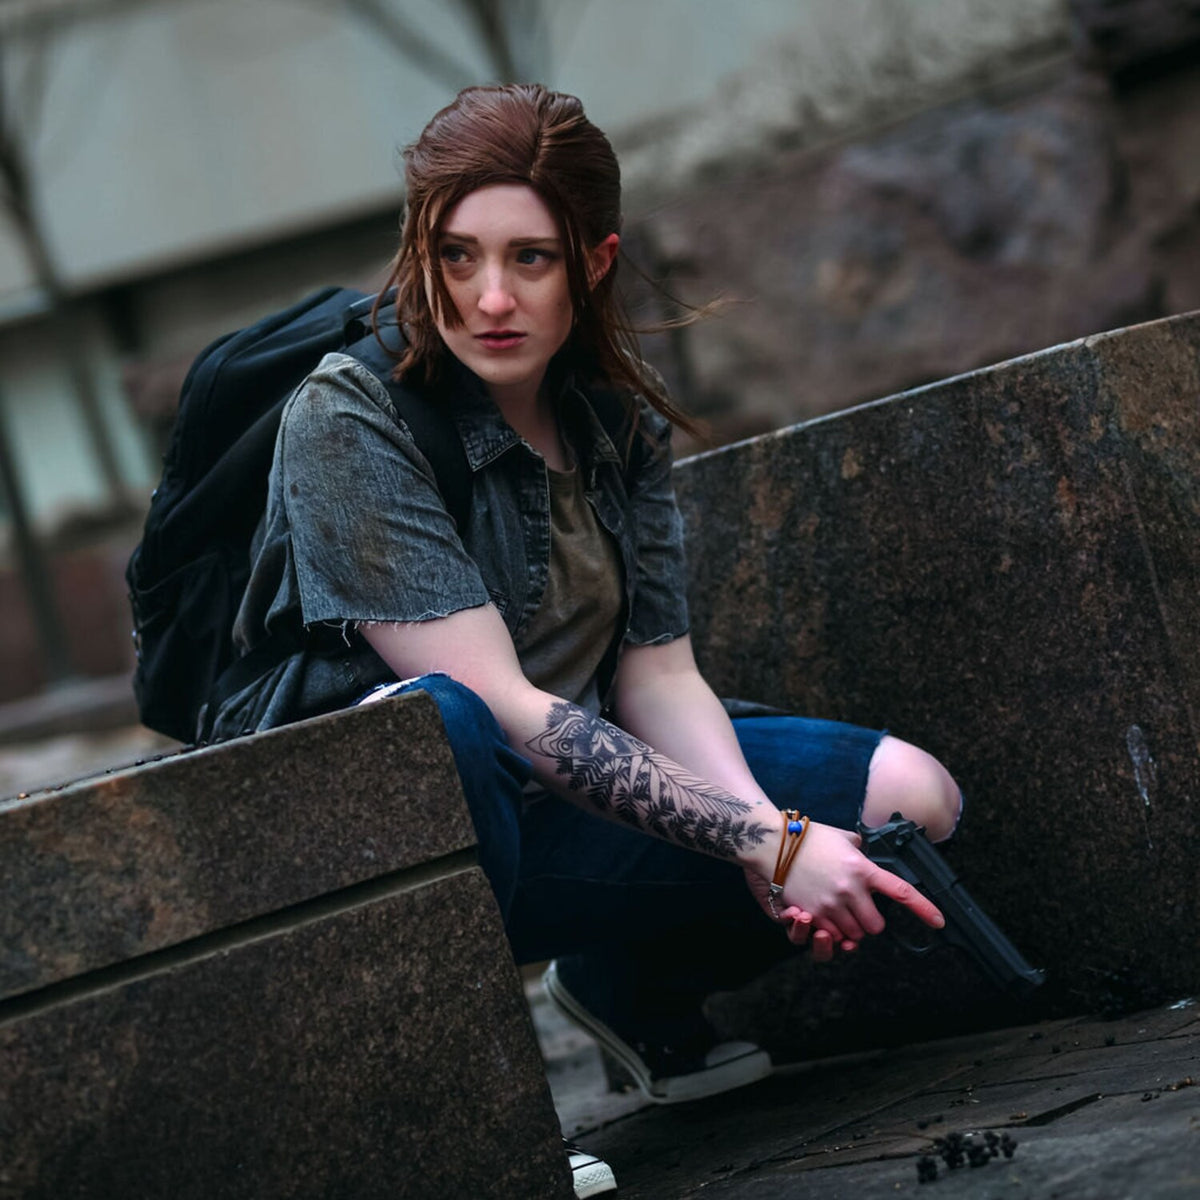 Body Art Cosplay The Last of Us Part II Ellie Fake Tattoo